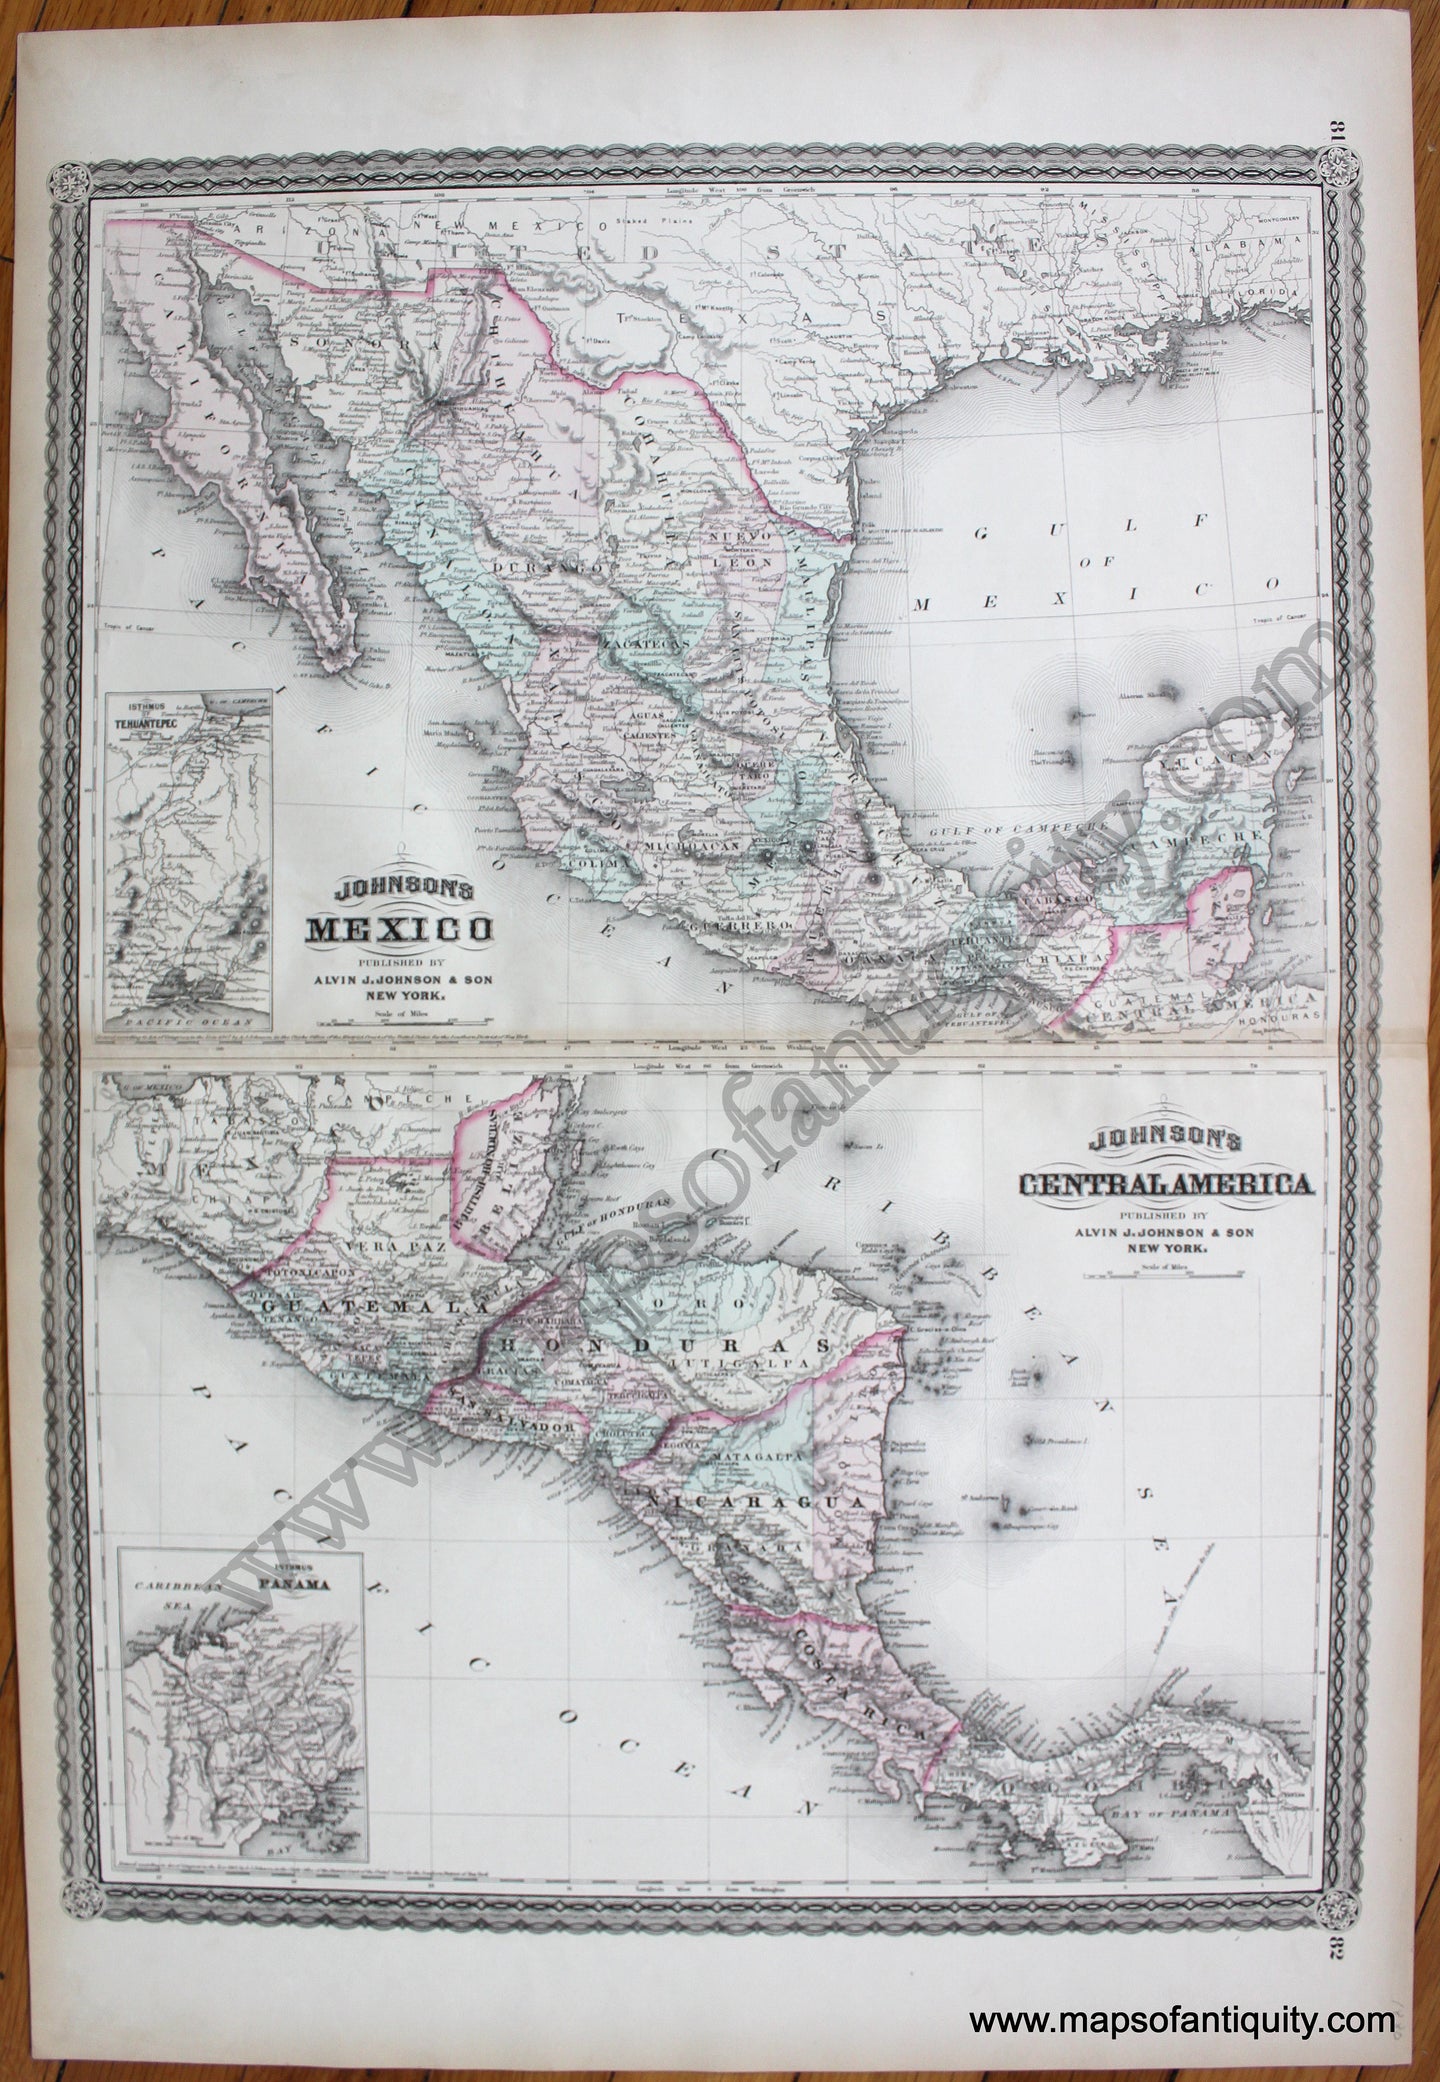 Antique-Hand-Colored-Map-Johnson's-Mexico-Johnson's-Central-America-1880-Alvin-J.-Johnson-&-Son-Mexico-1800s-19th-century-Maps-of-Antiquity